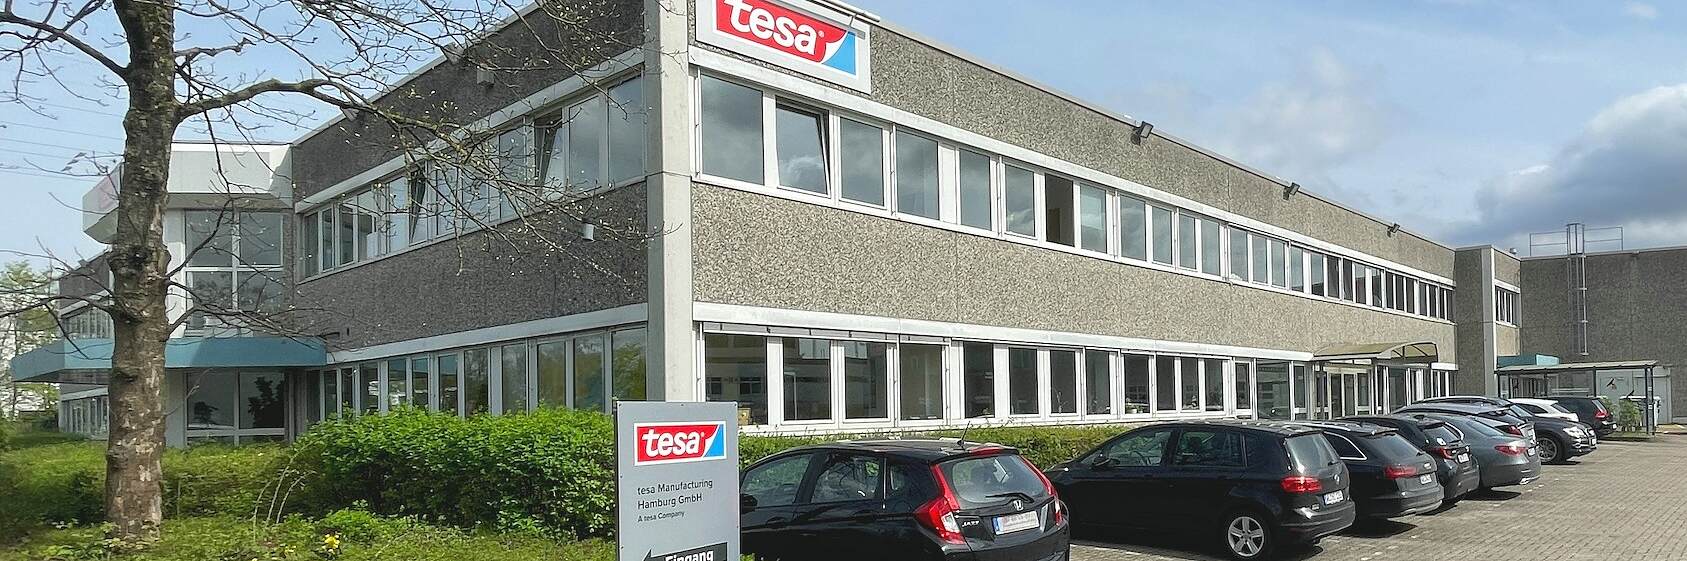 tesa Manufacturing Hamburg GmbH